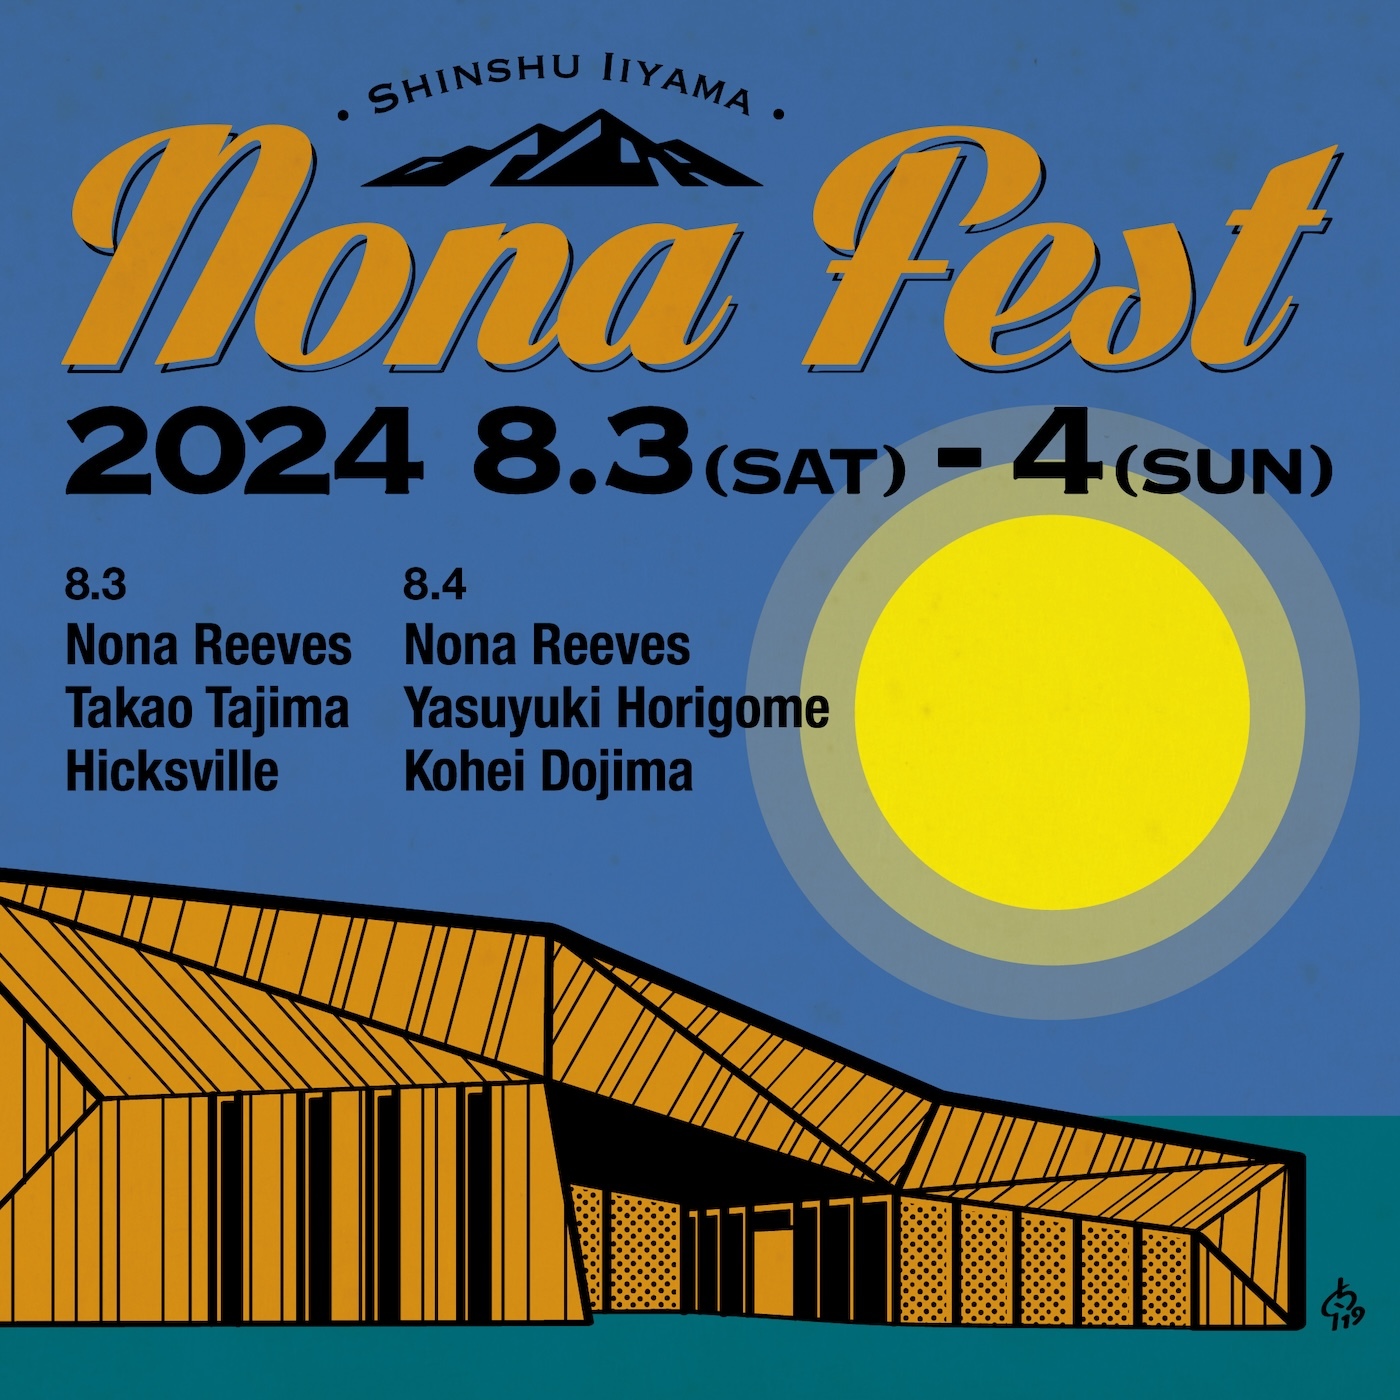 NONA REEVESのドラマー小松シゲルの地元・長野県飯山市で『信州いいやまノーナ・フェス2024』2DAYS開催決定